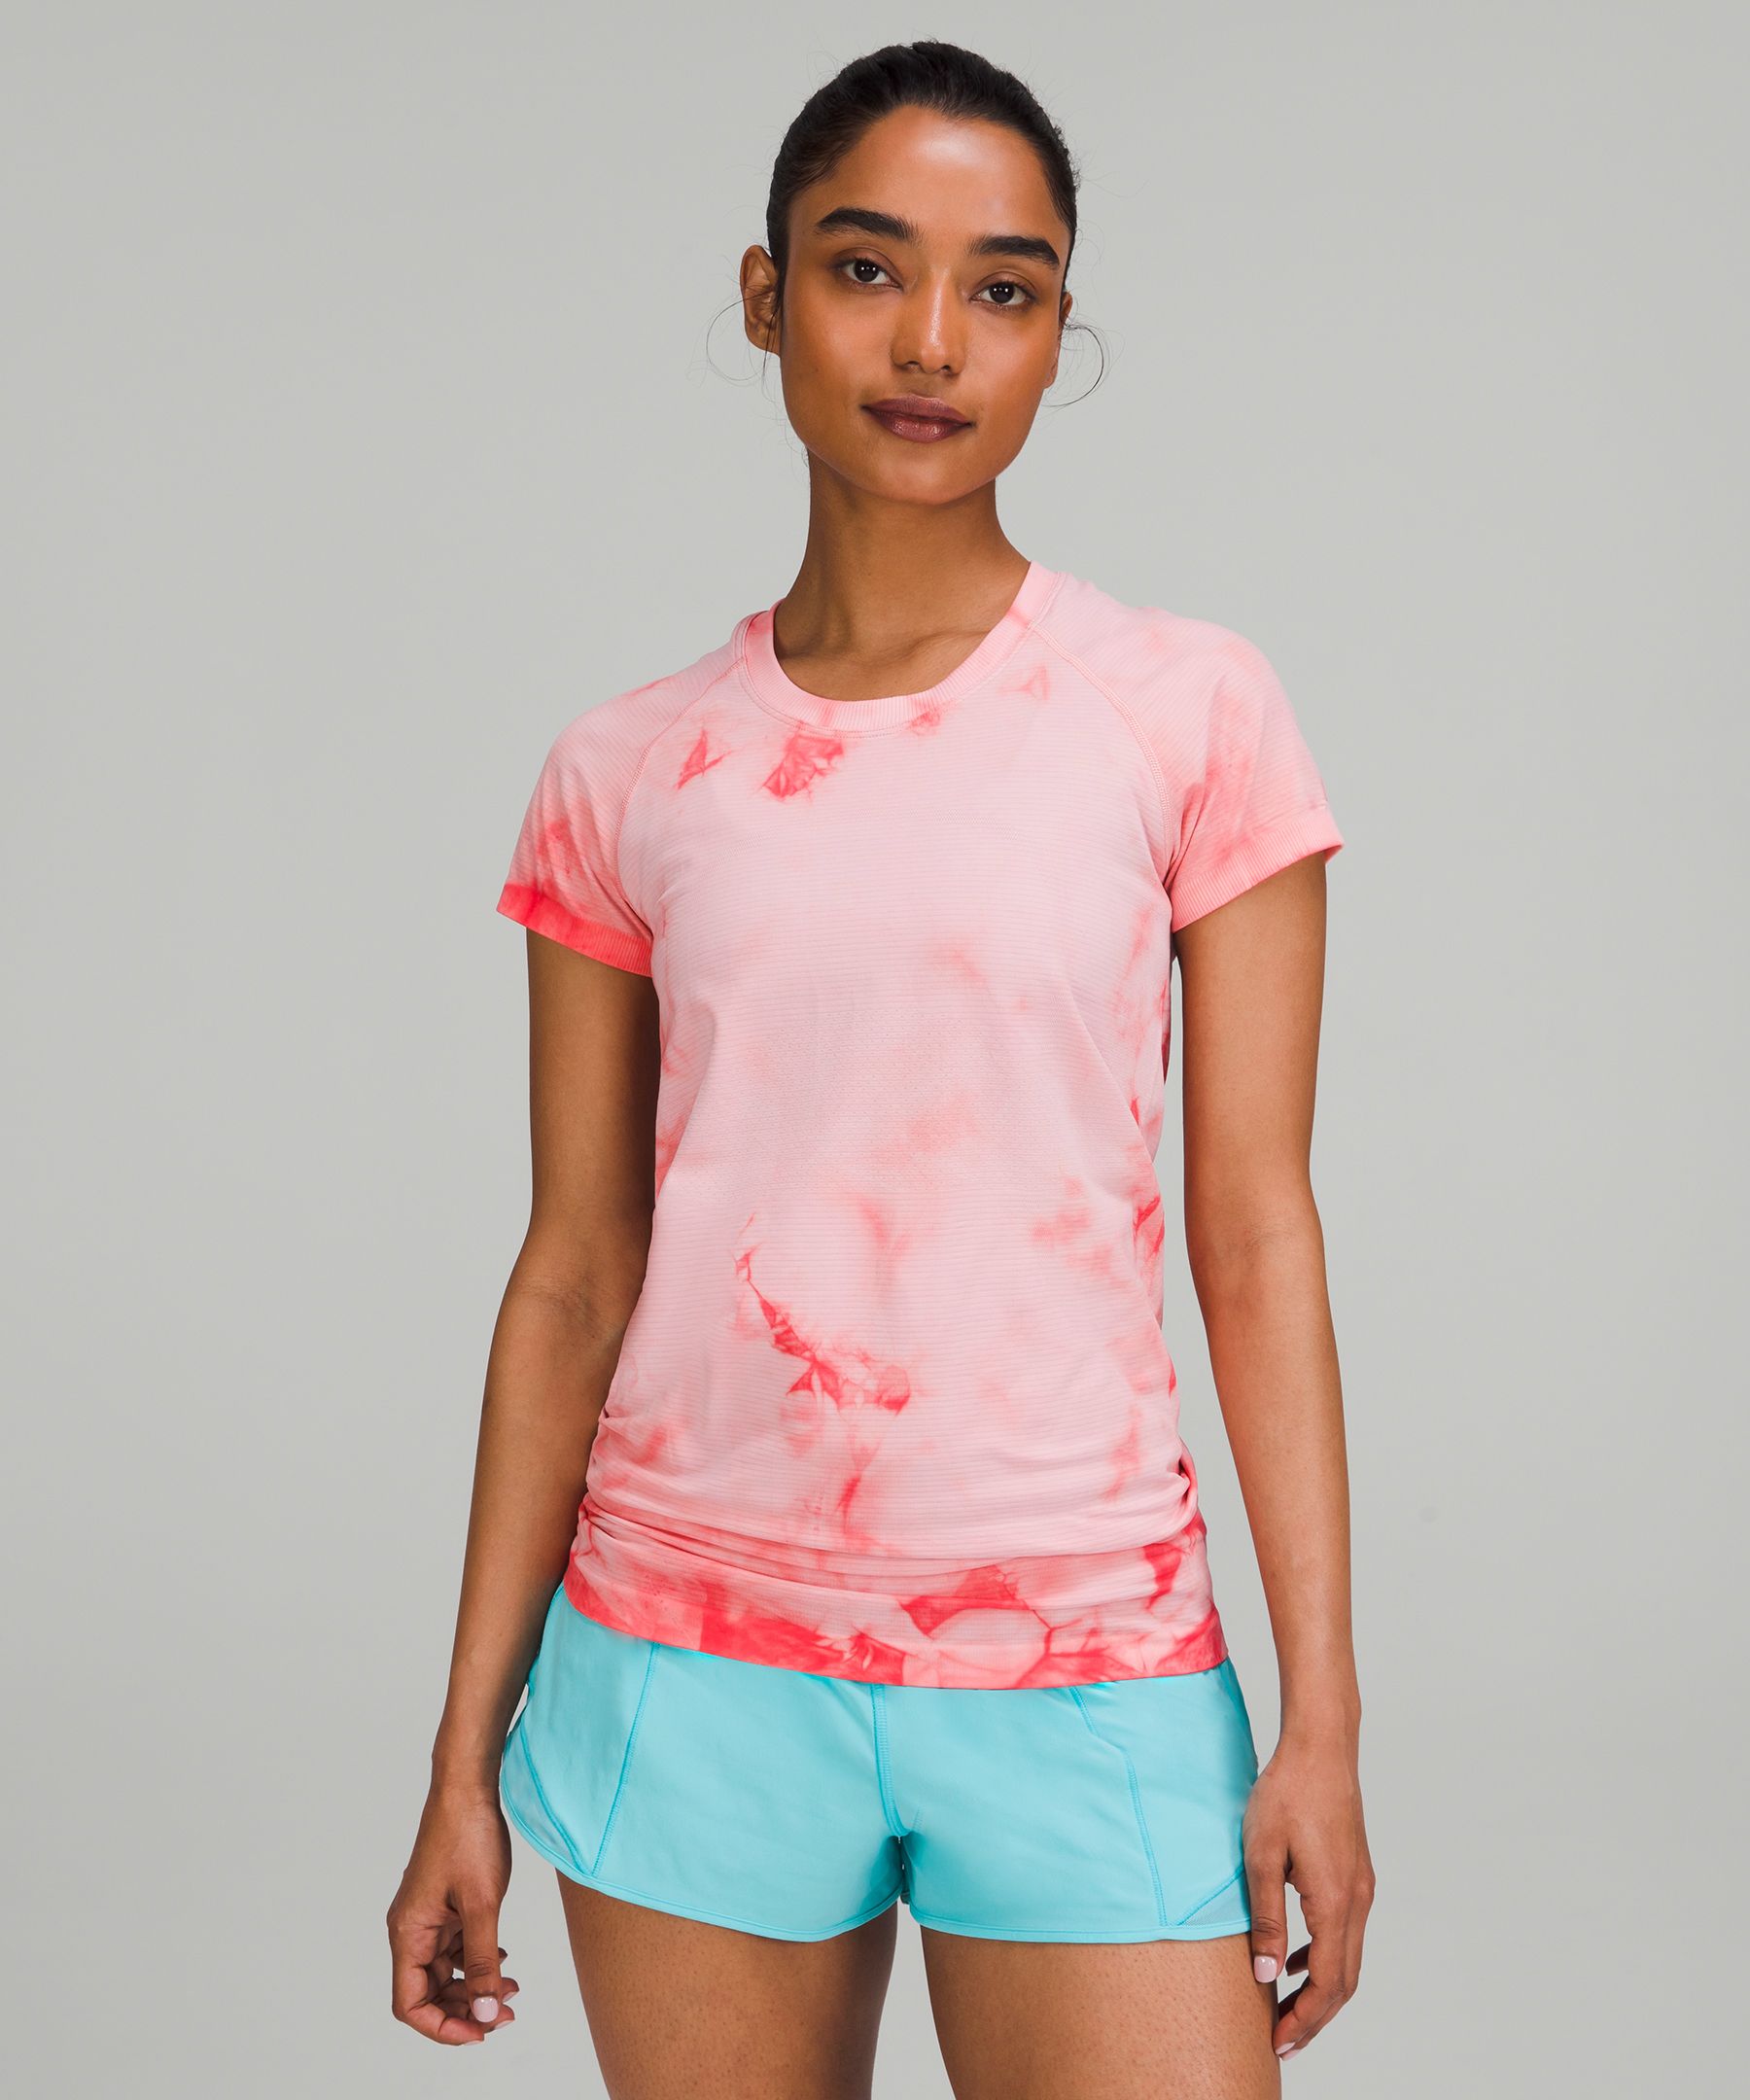 Lululemon Swiftly Tech Short Sleeve Shirt 2.0 In Marble Dye Raspberry